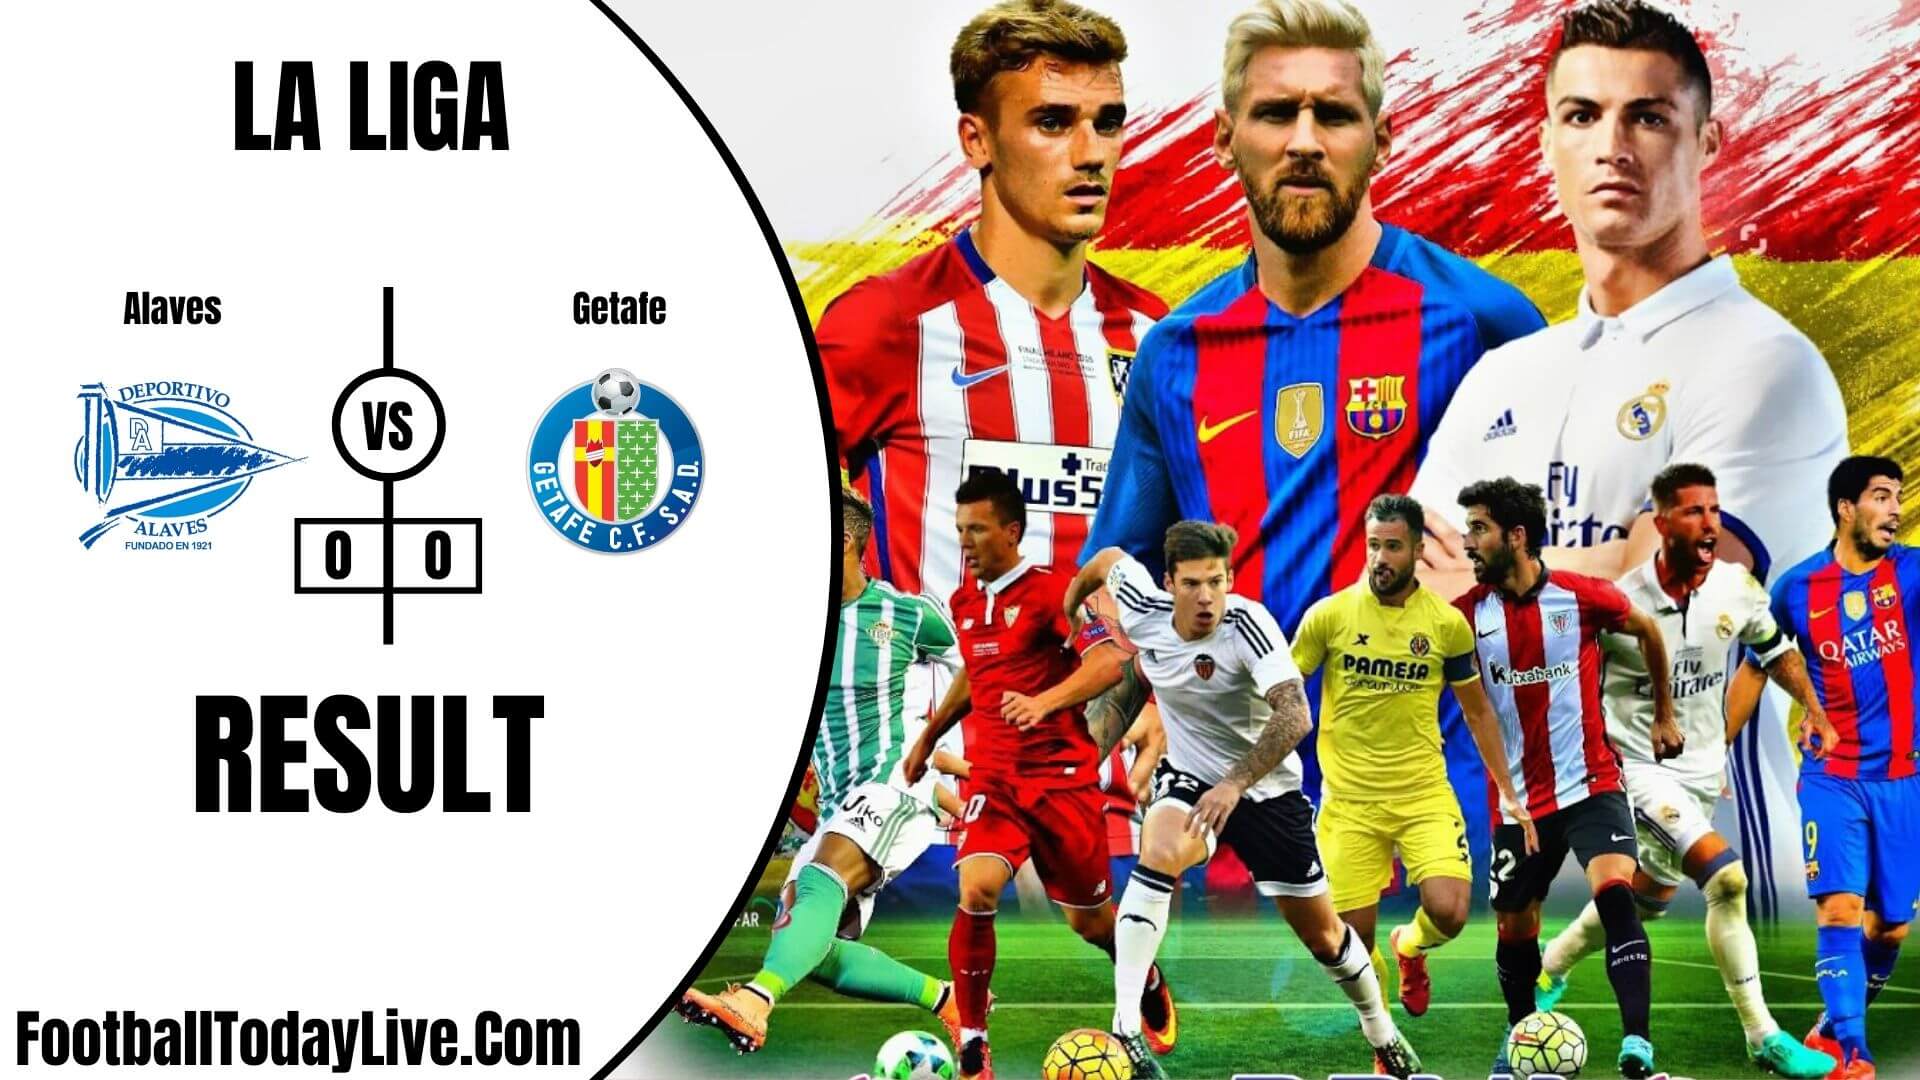 Alaves Vs Getafe | La Liga Week 36 Result 2020